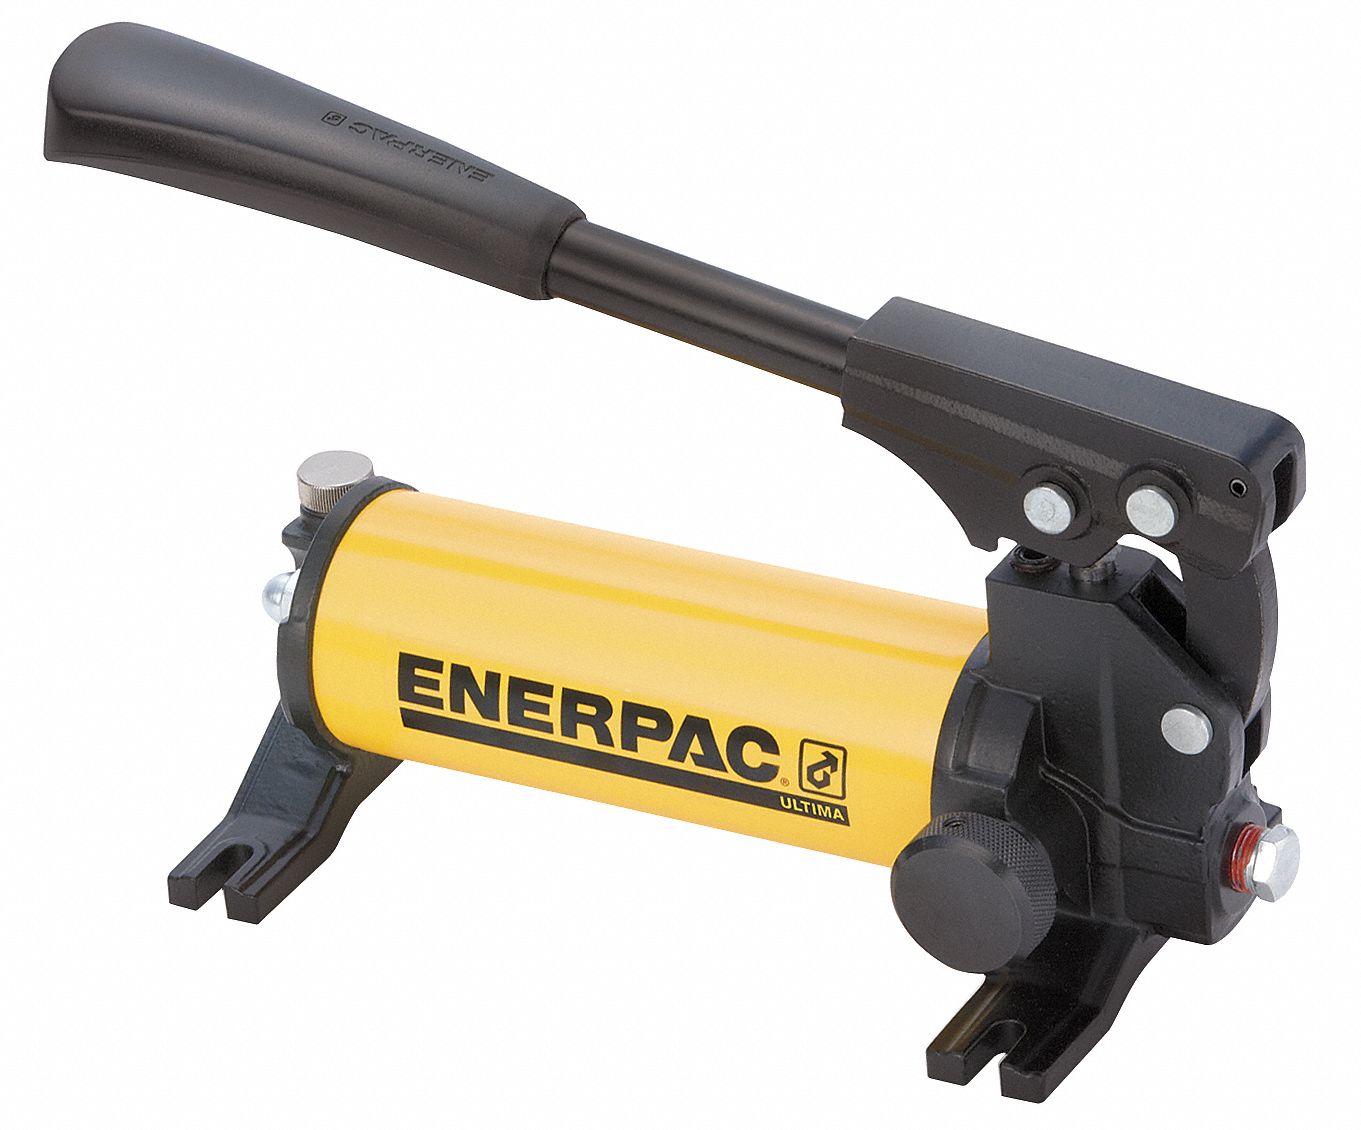 Enerpac 1 Stages 2850 Psi Max Pressure 1st Stage Hydraulic Hand Pump 18y533p18 Grainger